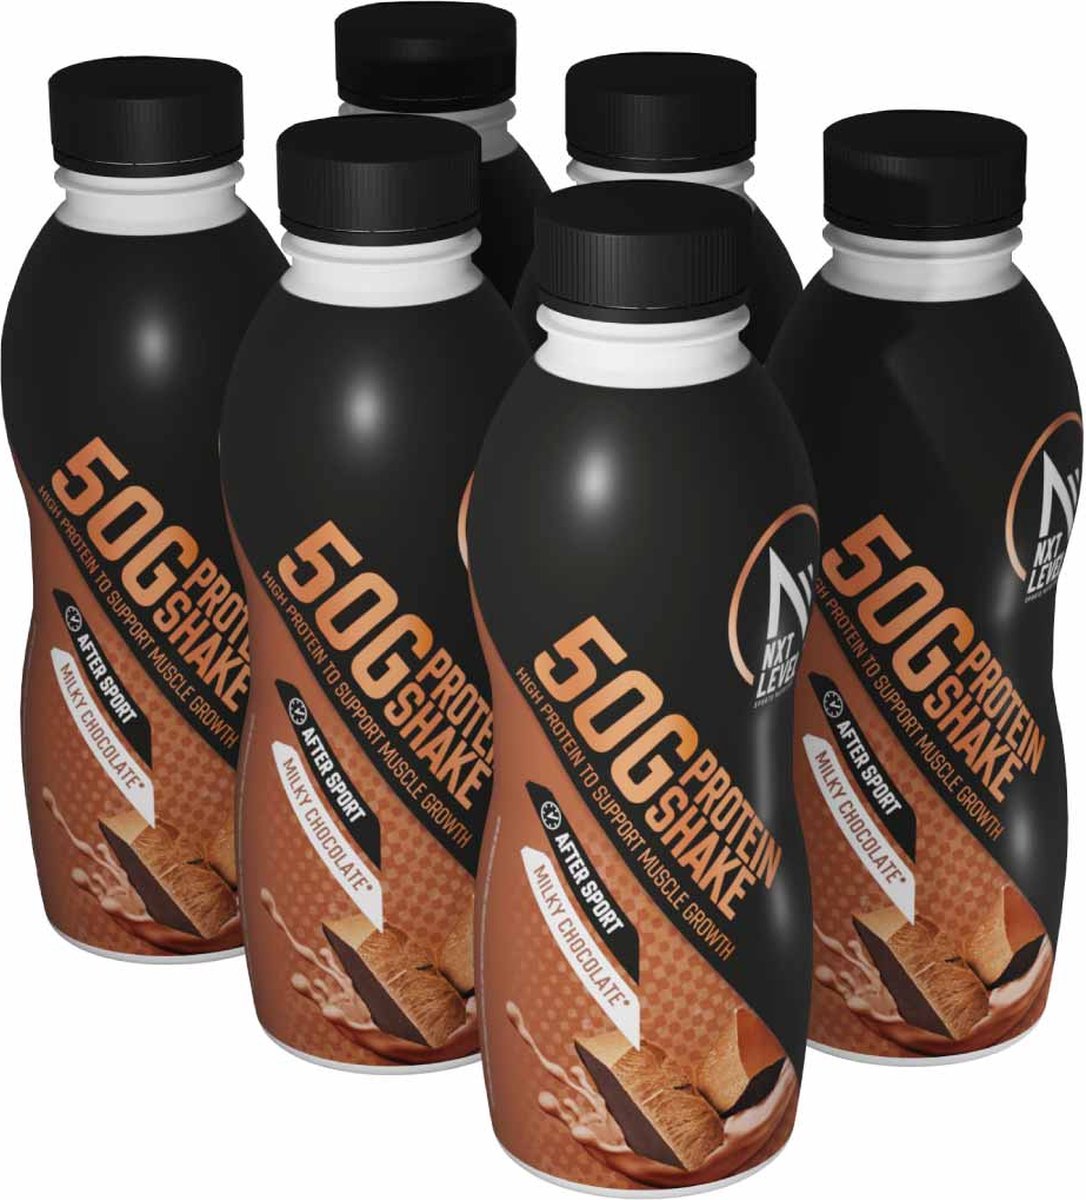 NXT Level Eiwitrijke Shake - 50g eiwitten per flesje - 6 x 500 ml - Melkchocolade